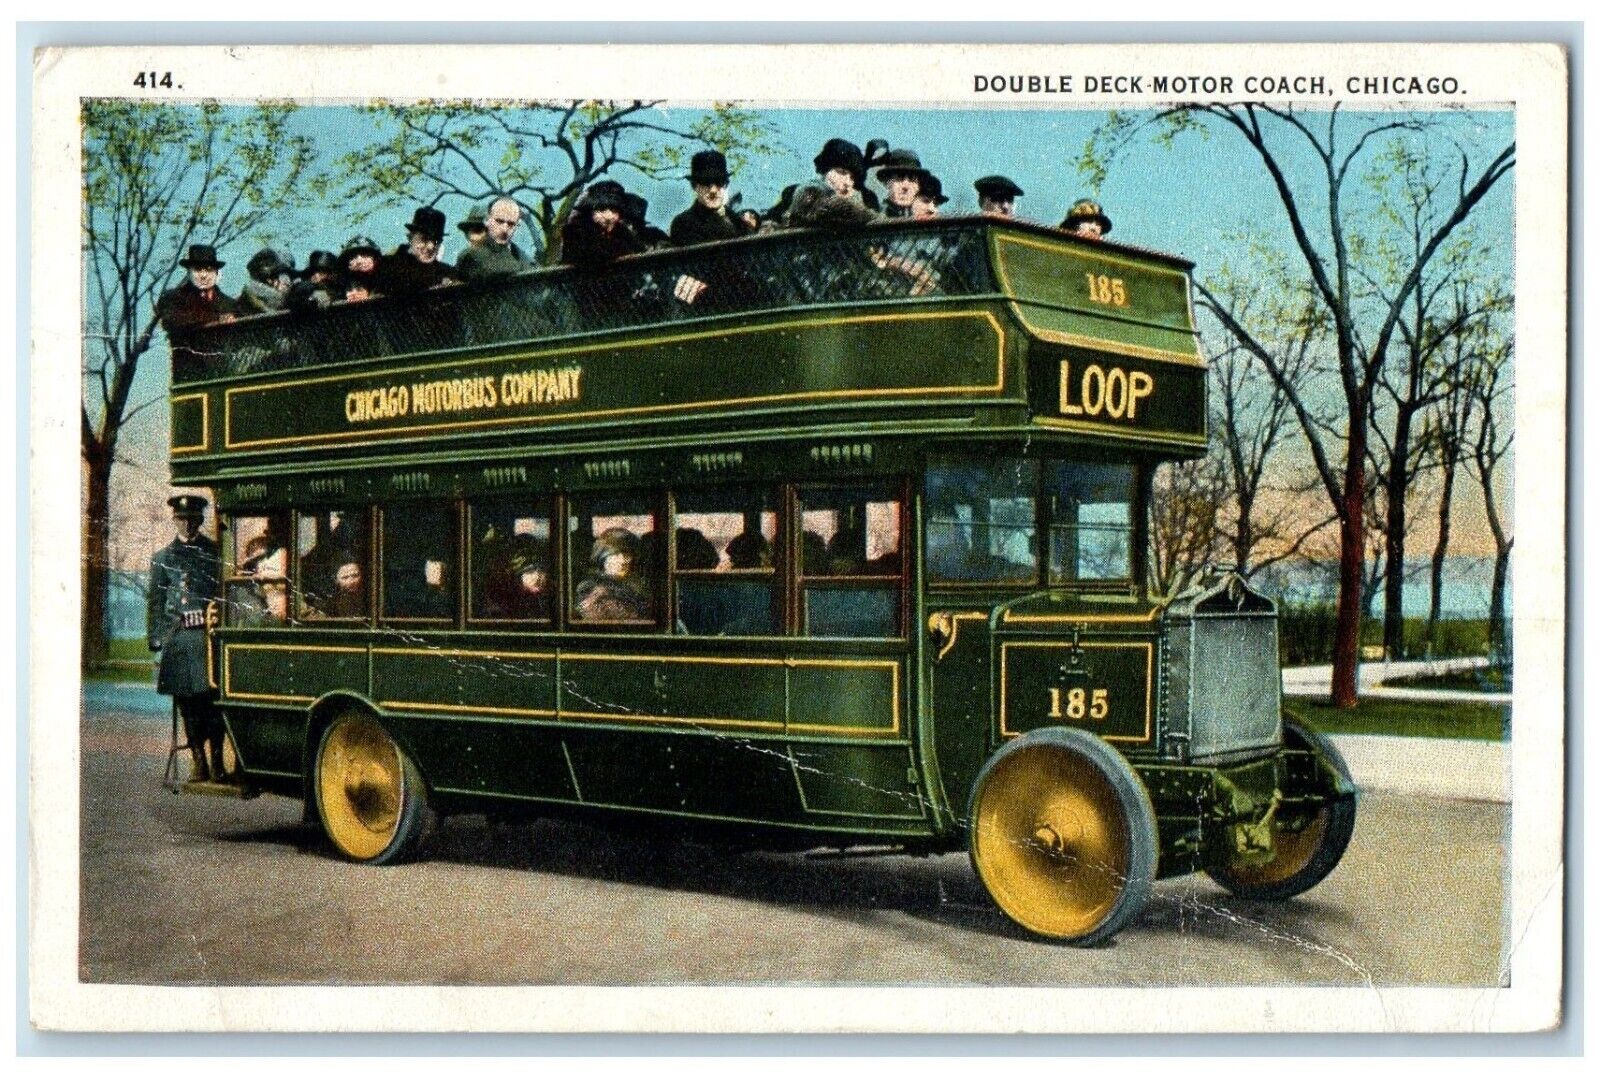 1924 Double Deck Motor Coach Chicago Illinois IL, Chicago Motorbus Co. Postcard